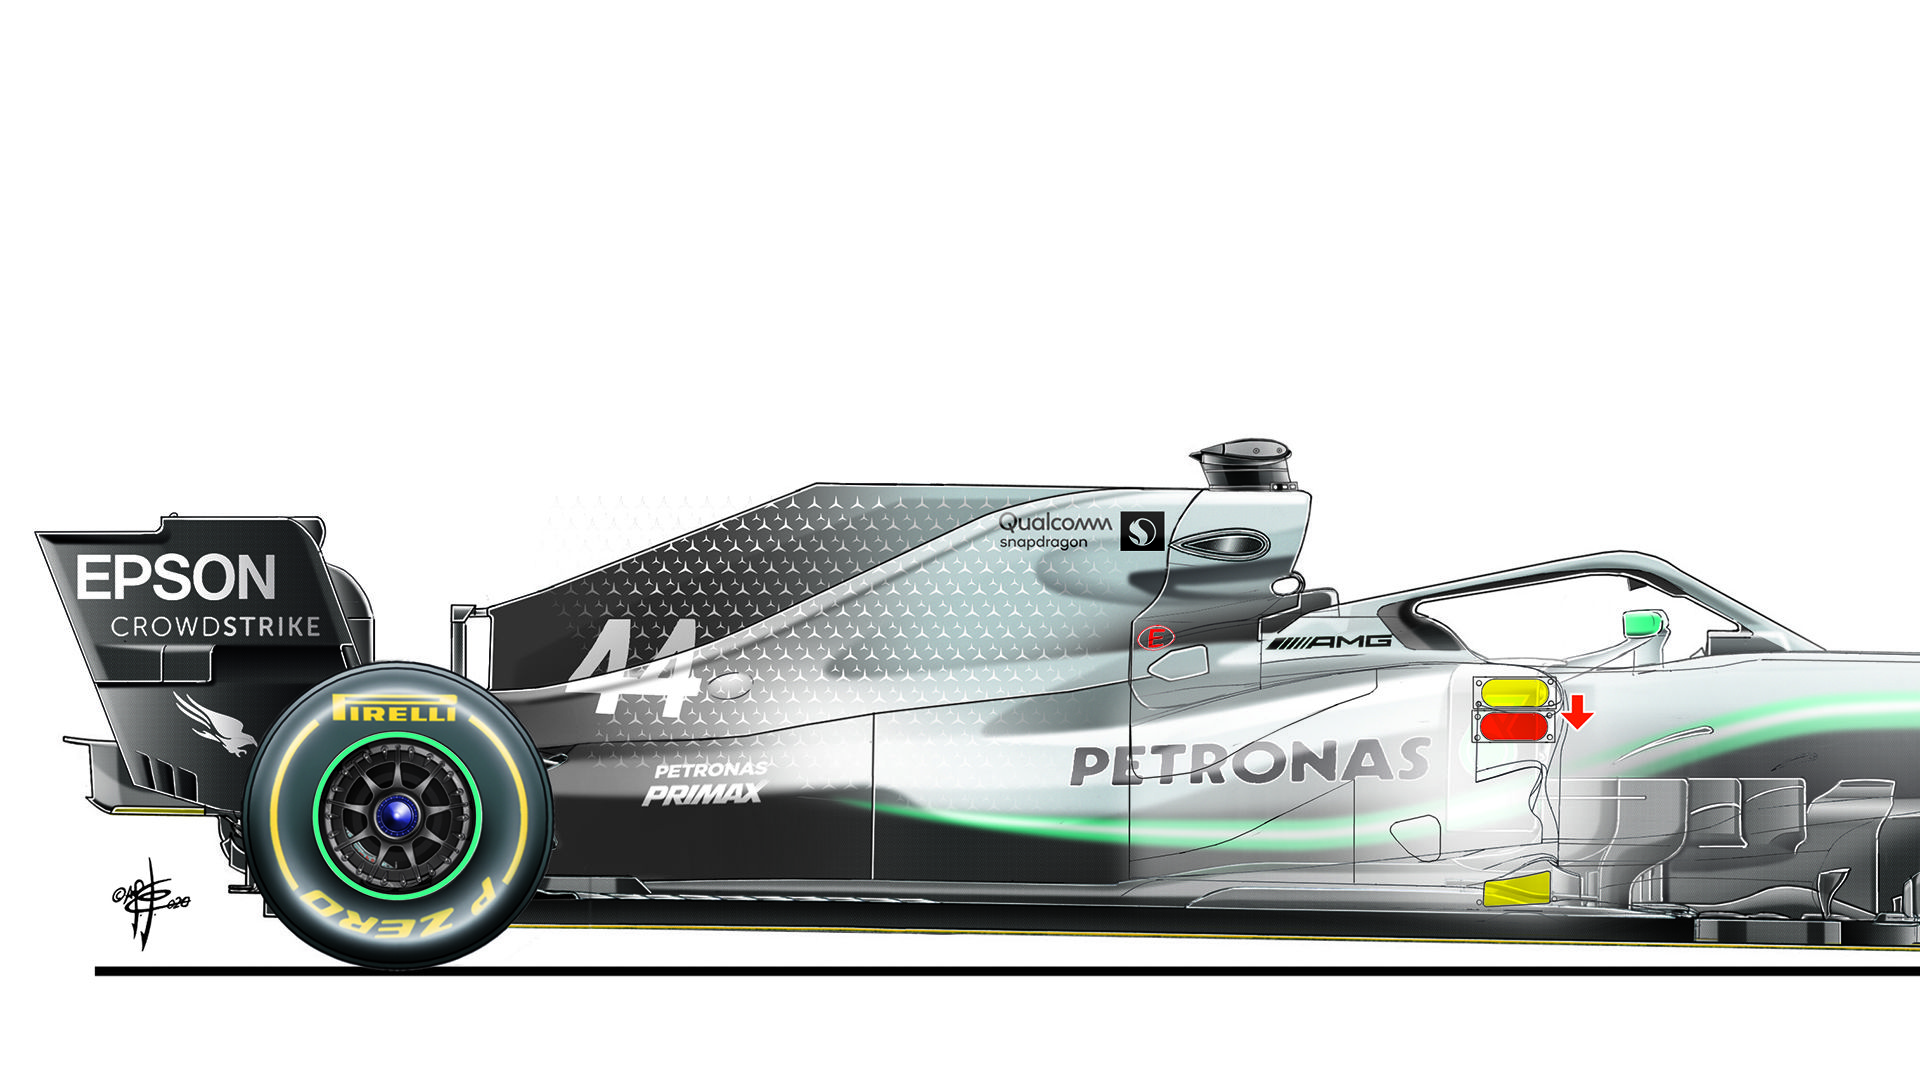 Mercedes' 2020 F1 car: Our first take on Lewis Hamilton's W11